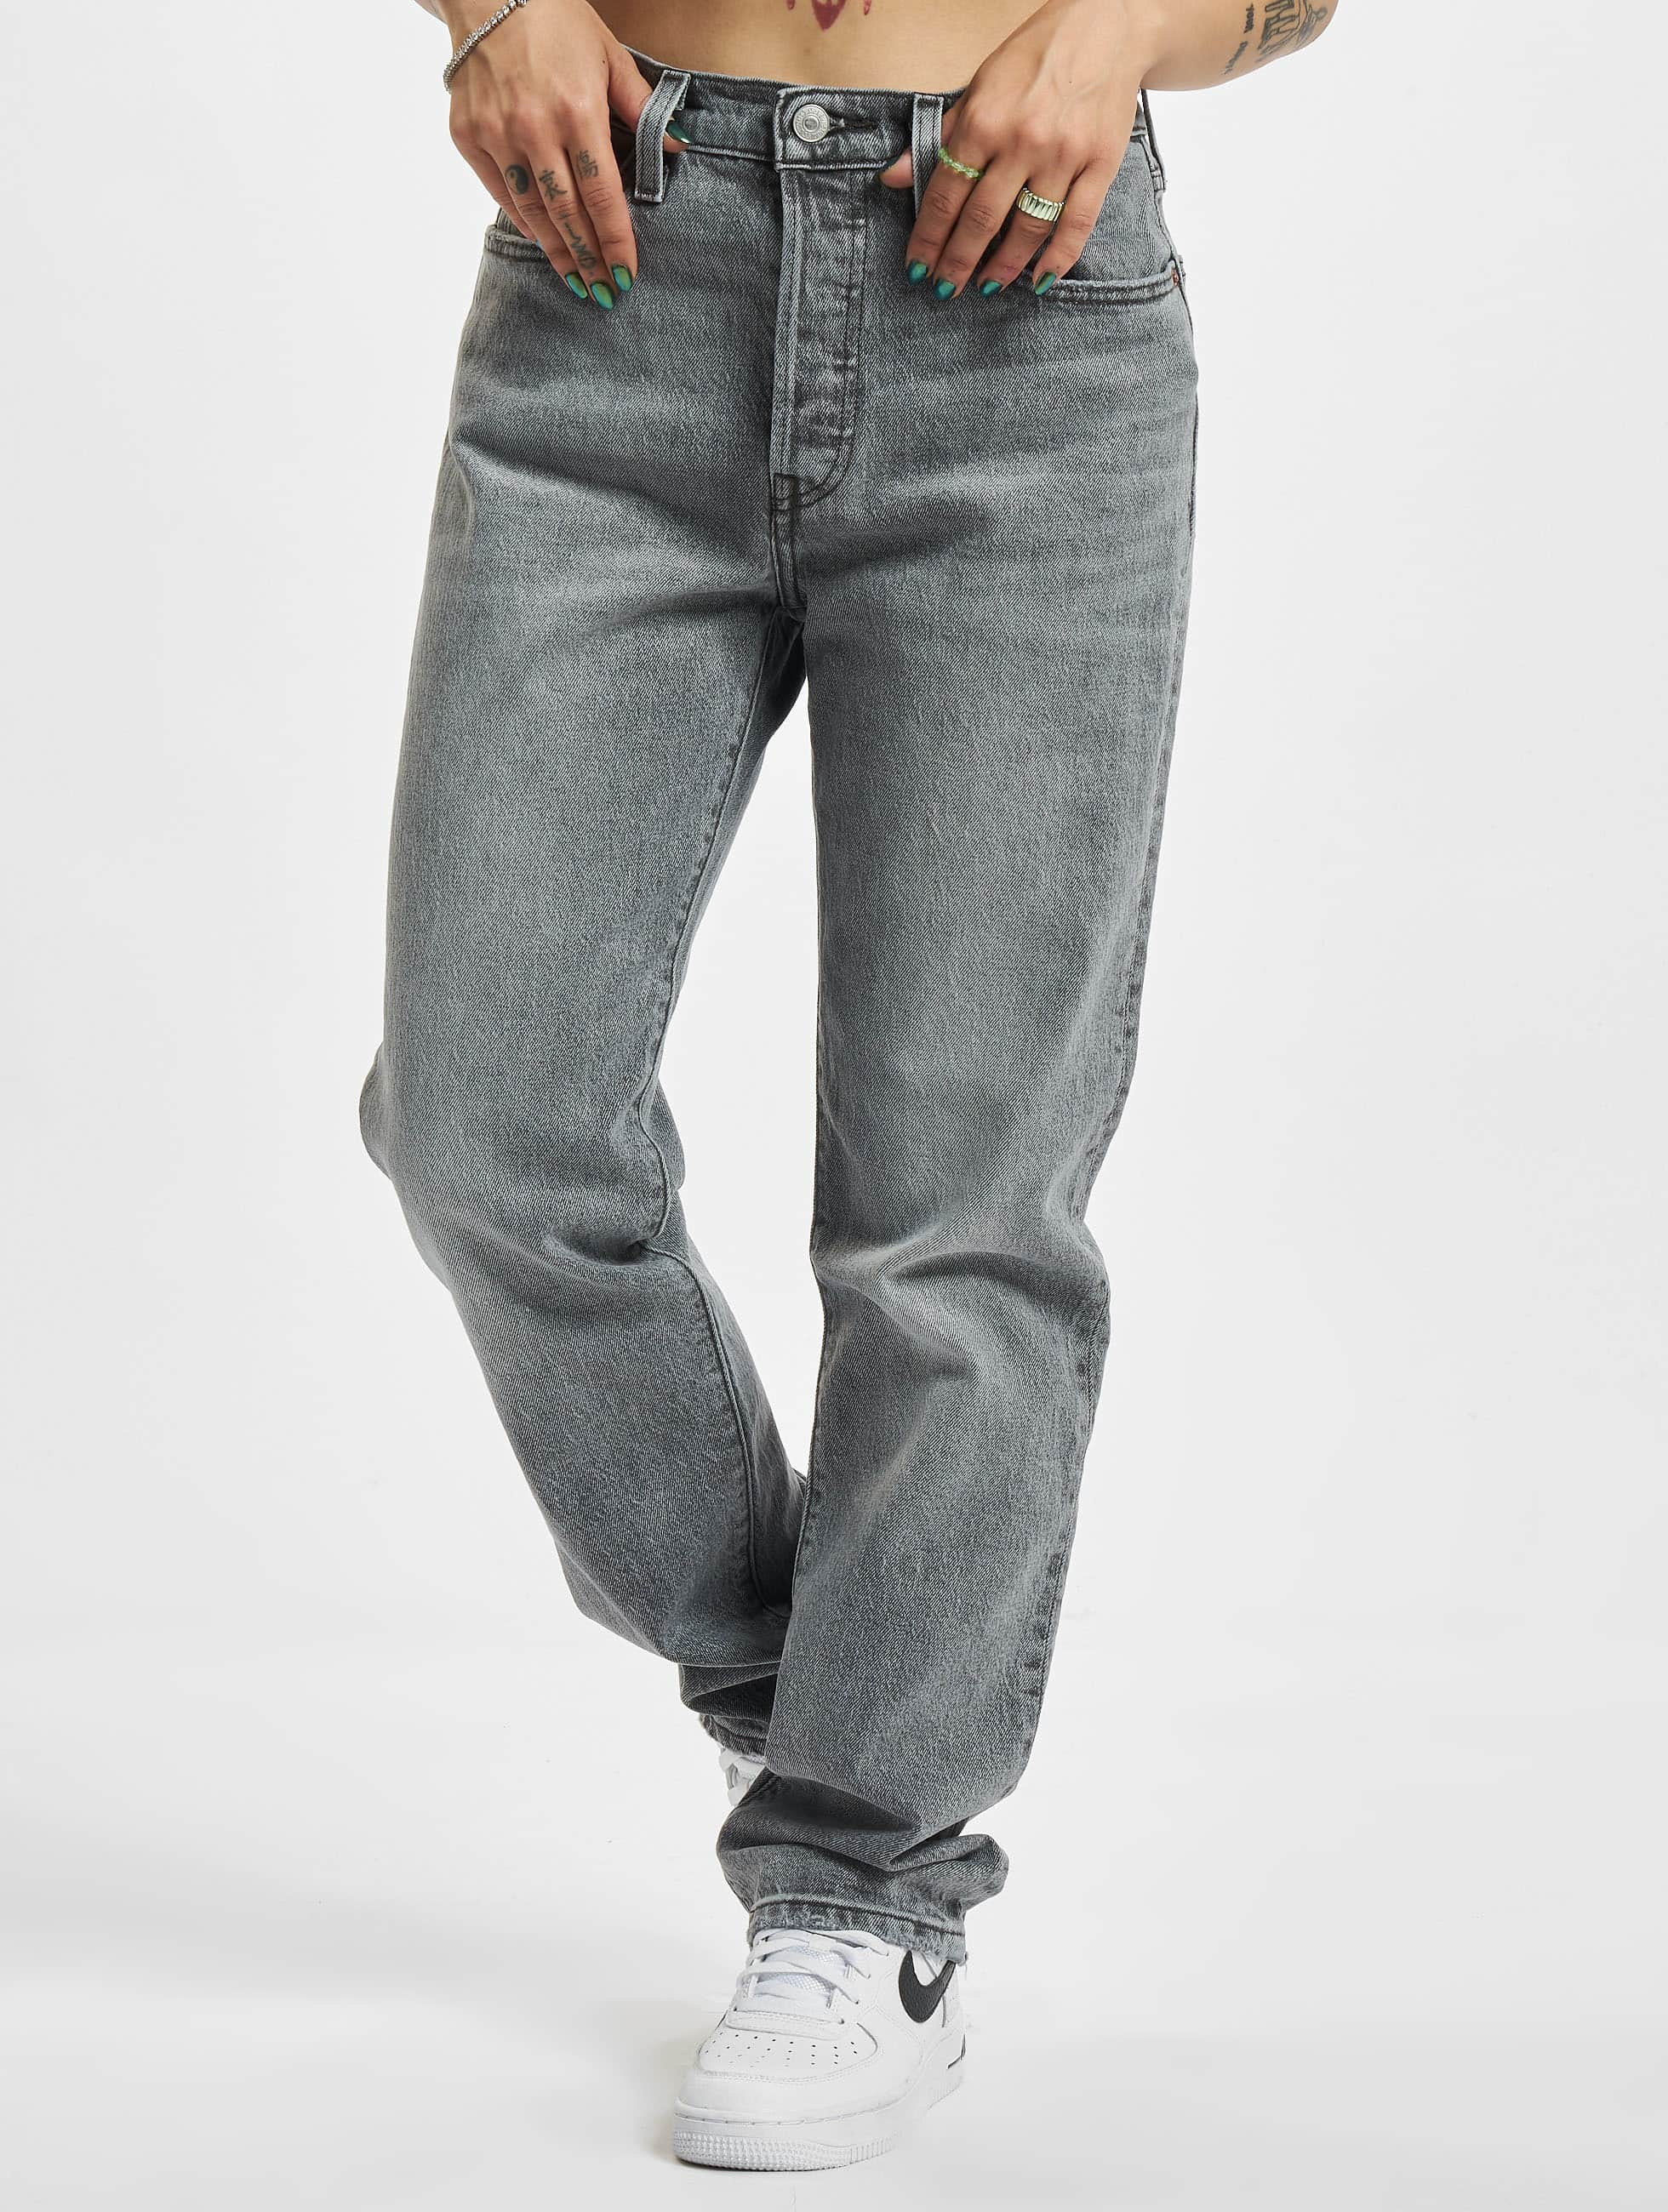 Jeugd Kapper Interesseren Levi's® Jeans / Straight fit jeans 501 Crop in grijs 911150